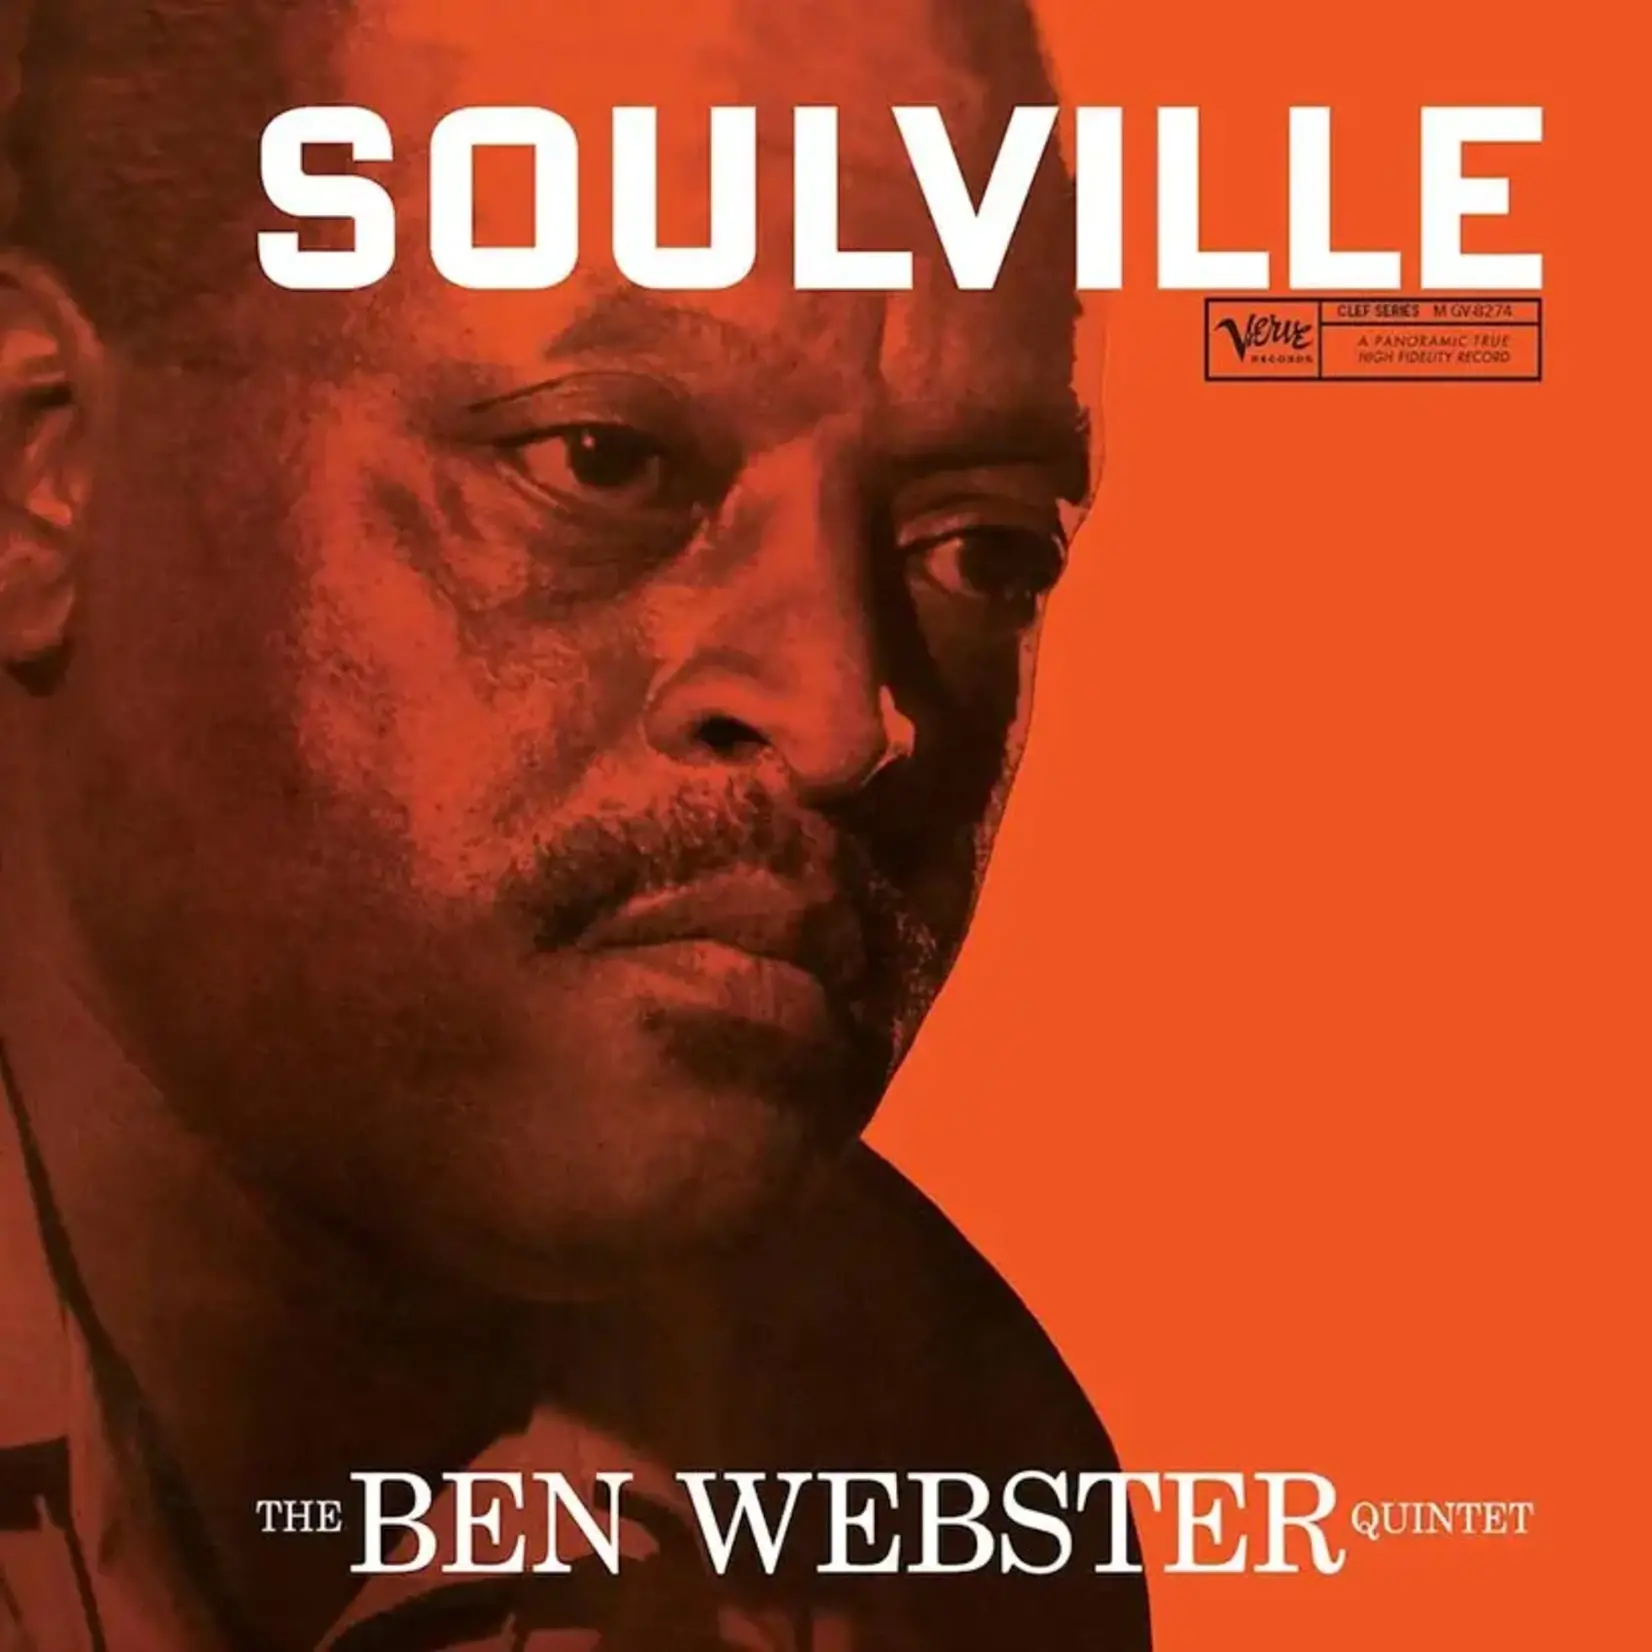 [New] Webster, Ben Quintet: Soulville (Verve Acoustic Sounds Series) [VERVE]